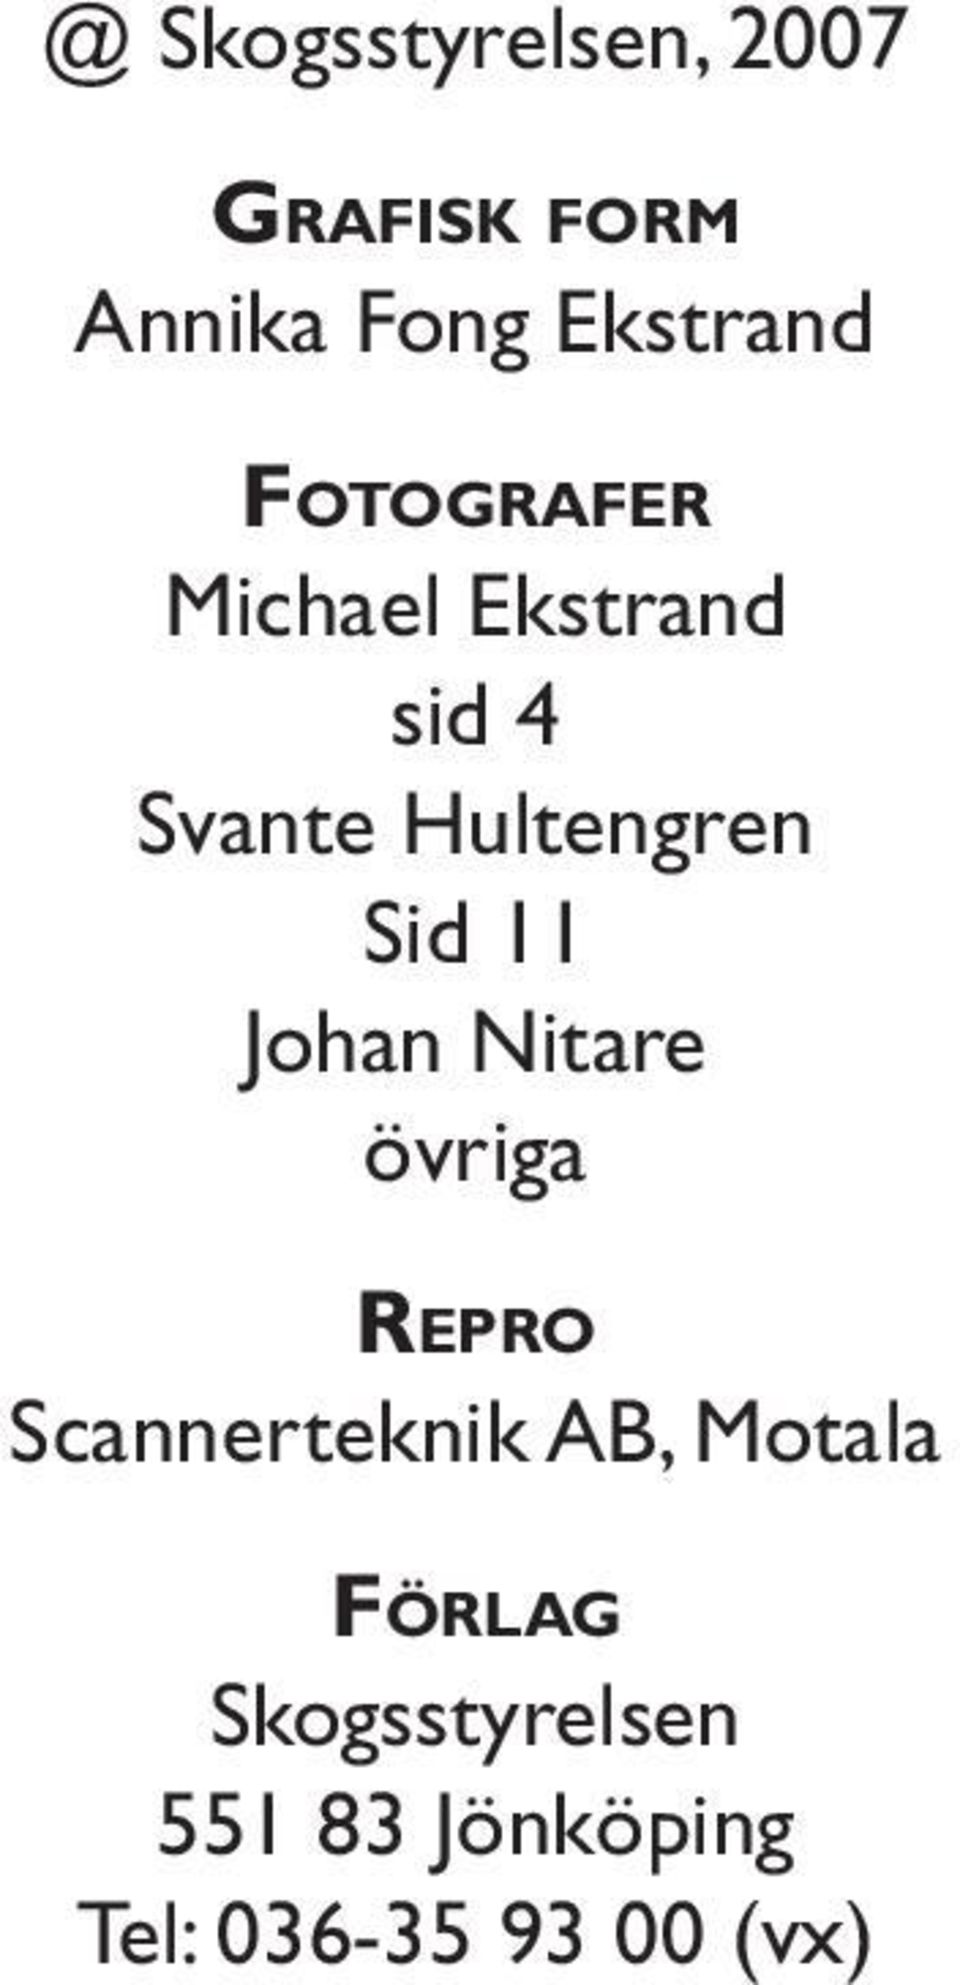 11 Johan Nitare övriga Repro Scannerteknik AB, Motala